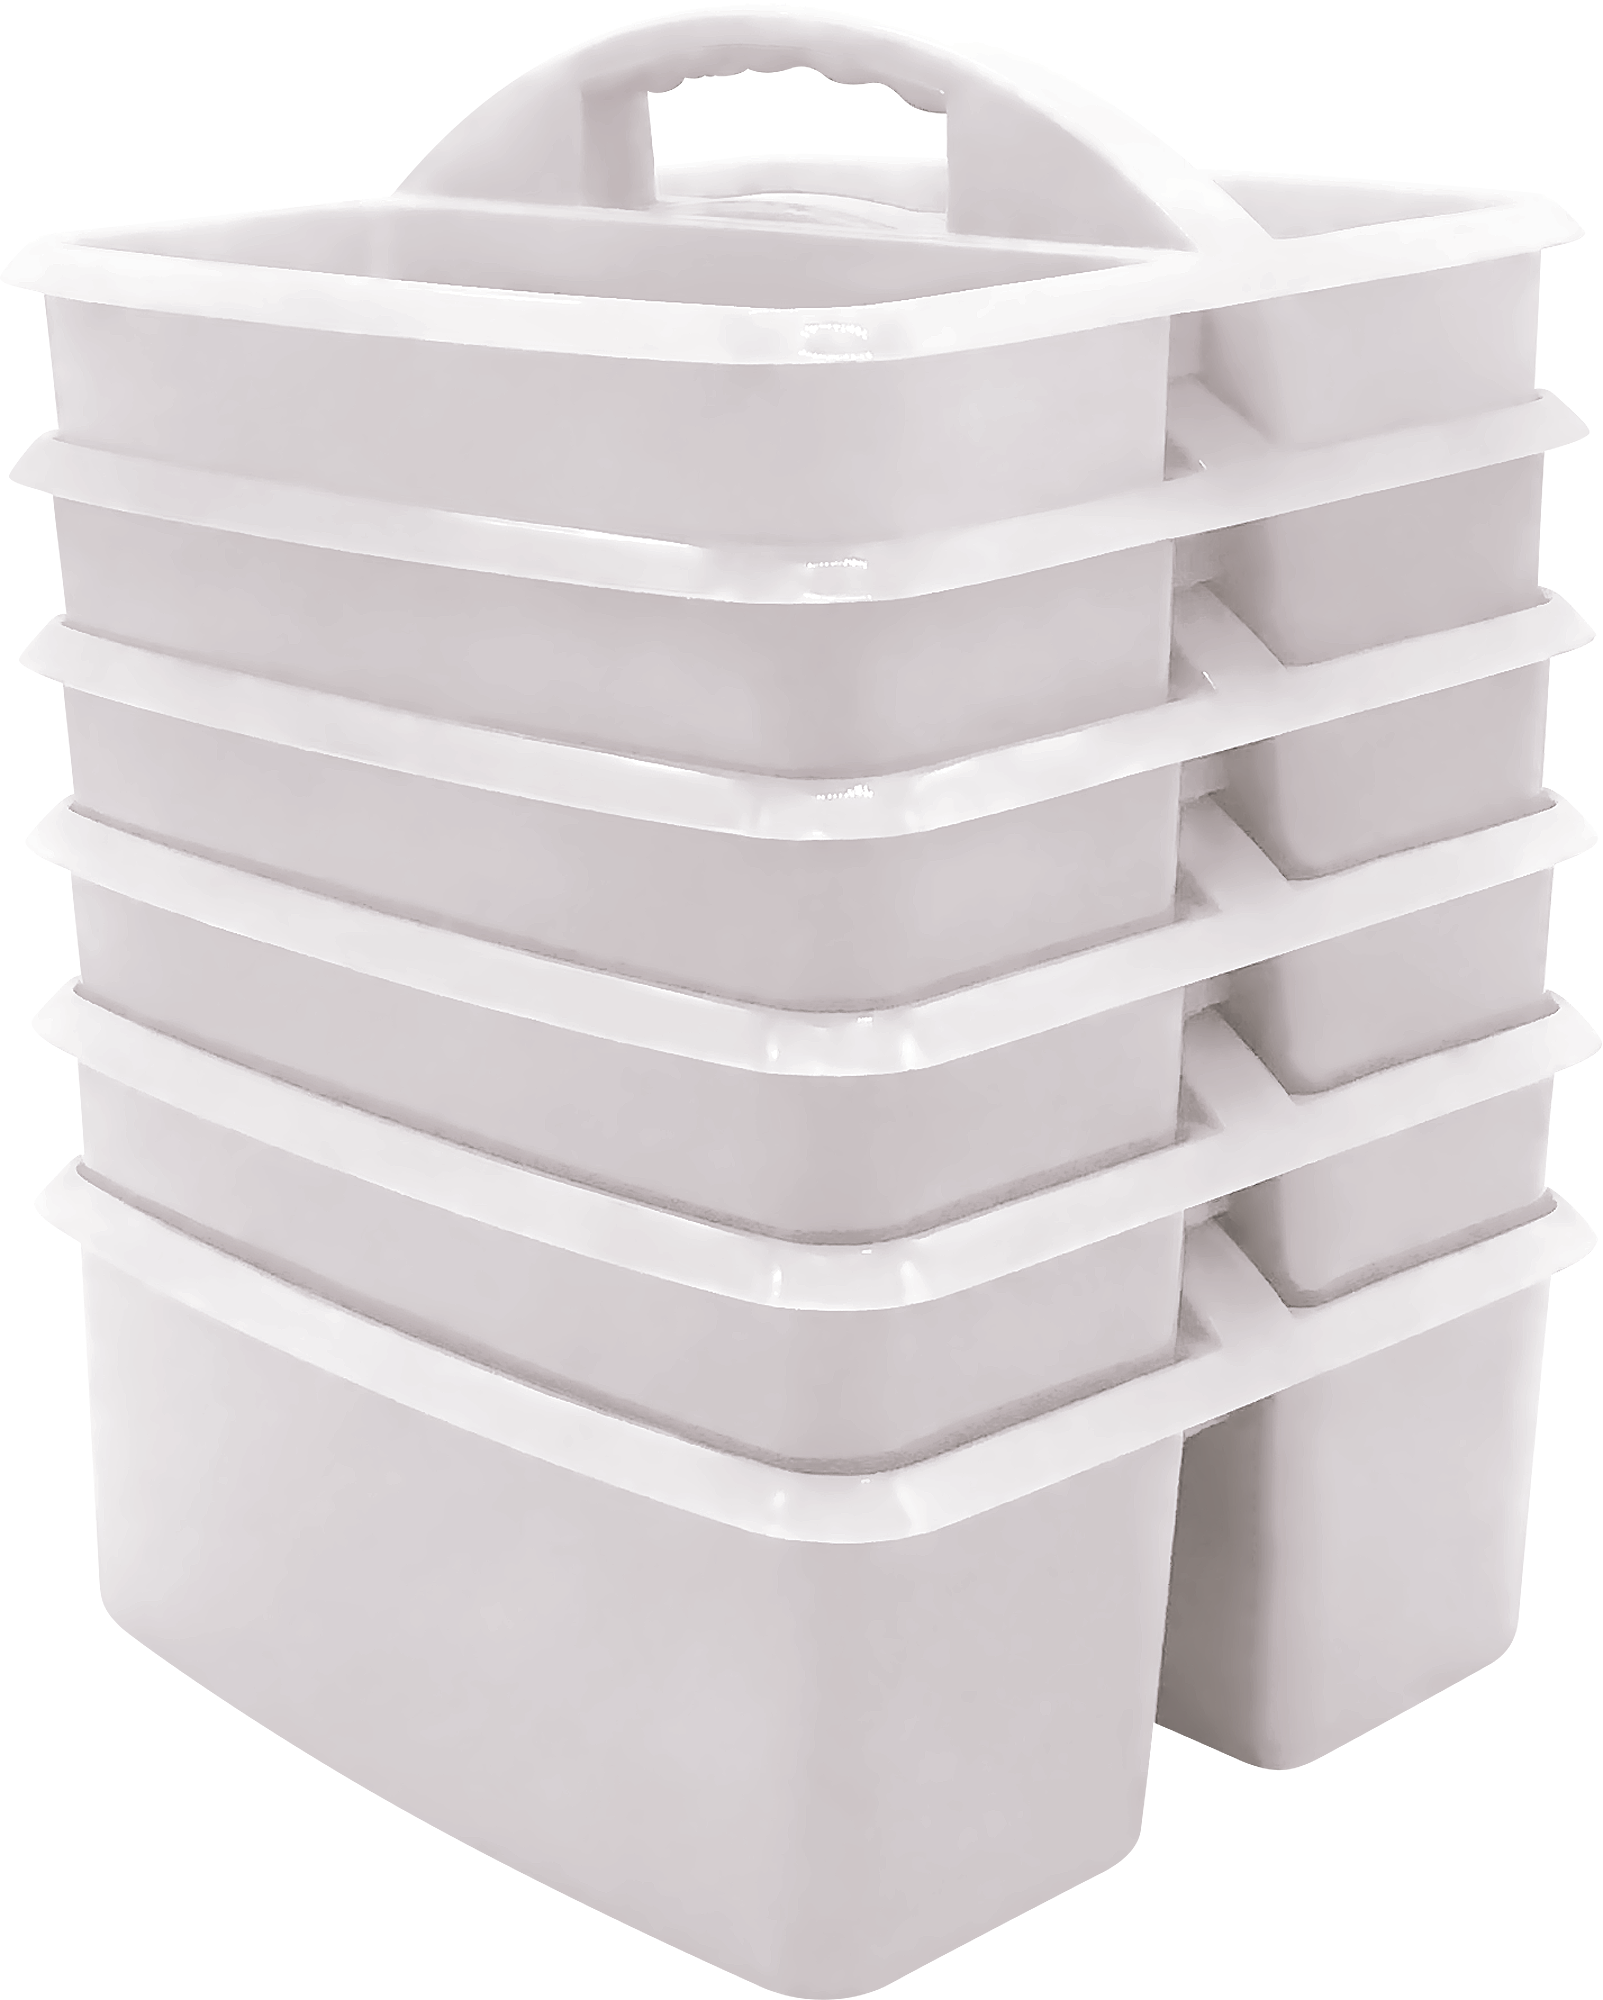 The Teachers' Lounge®  White Large Plastic Storage Bin, Pack of 3